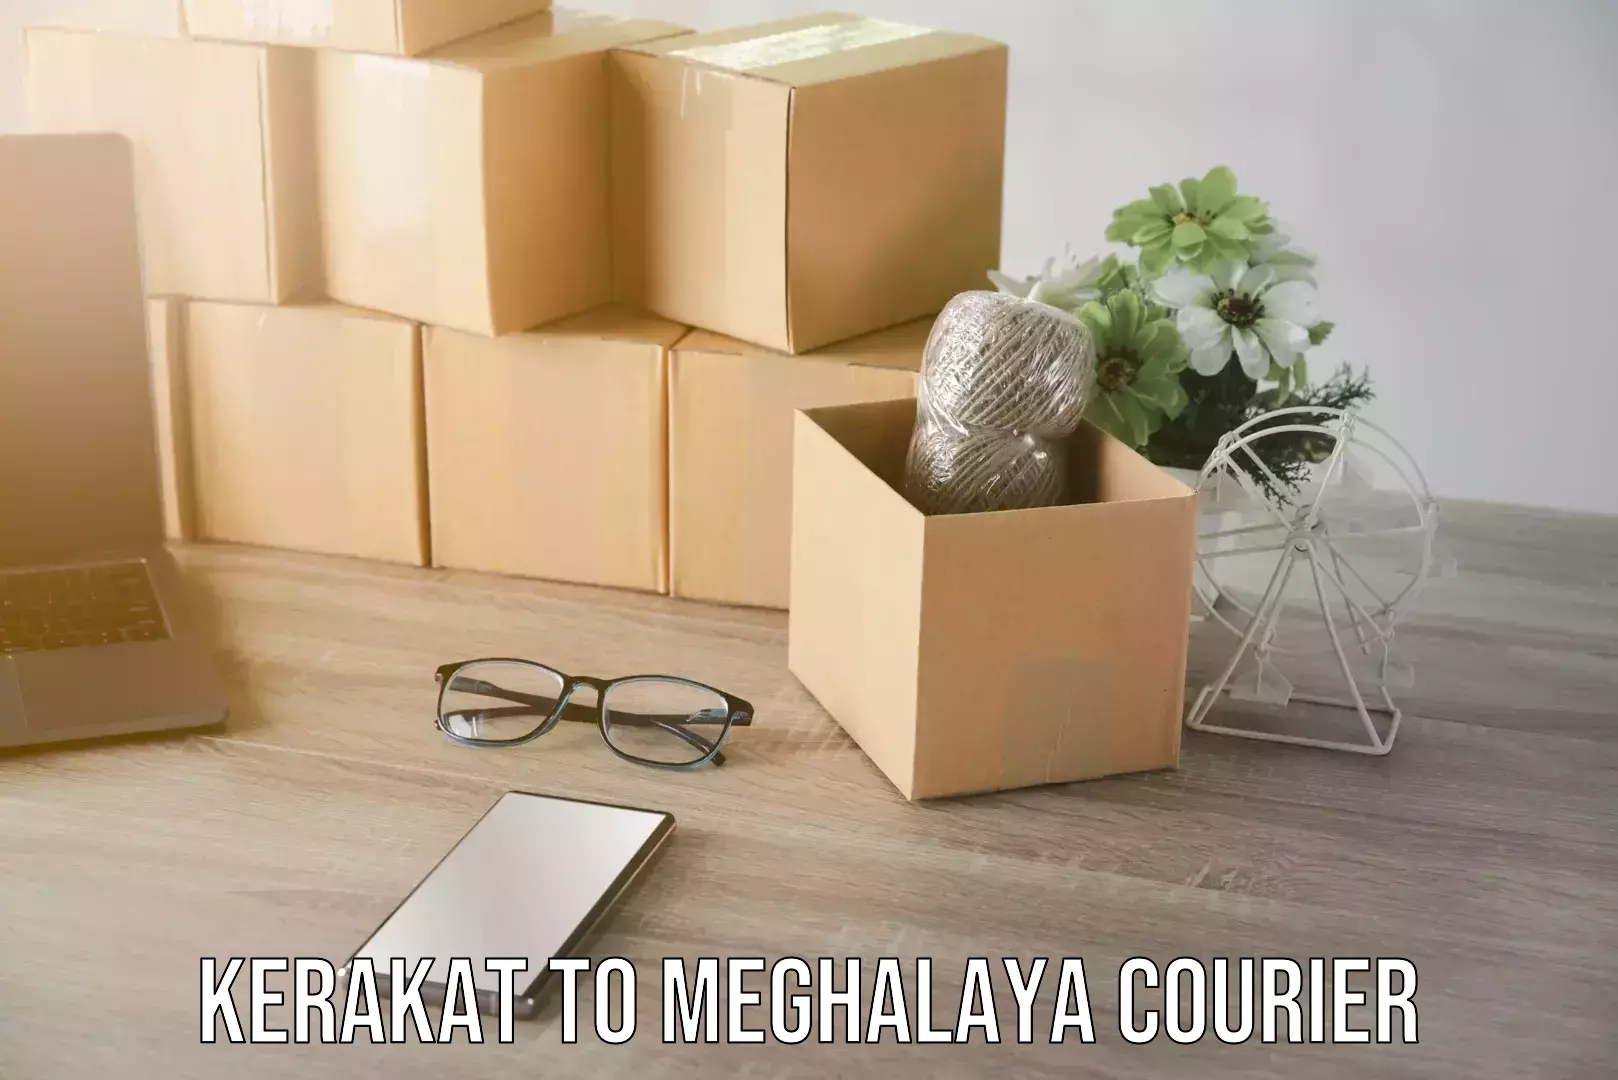 Efficient furniture movers Kerakat to Meghalaya